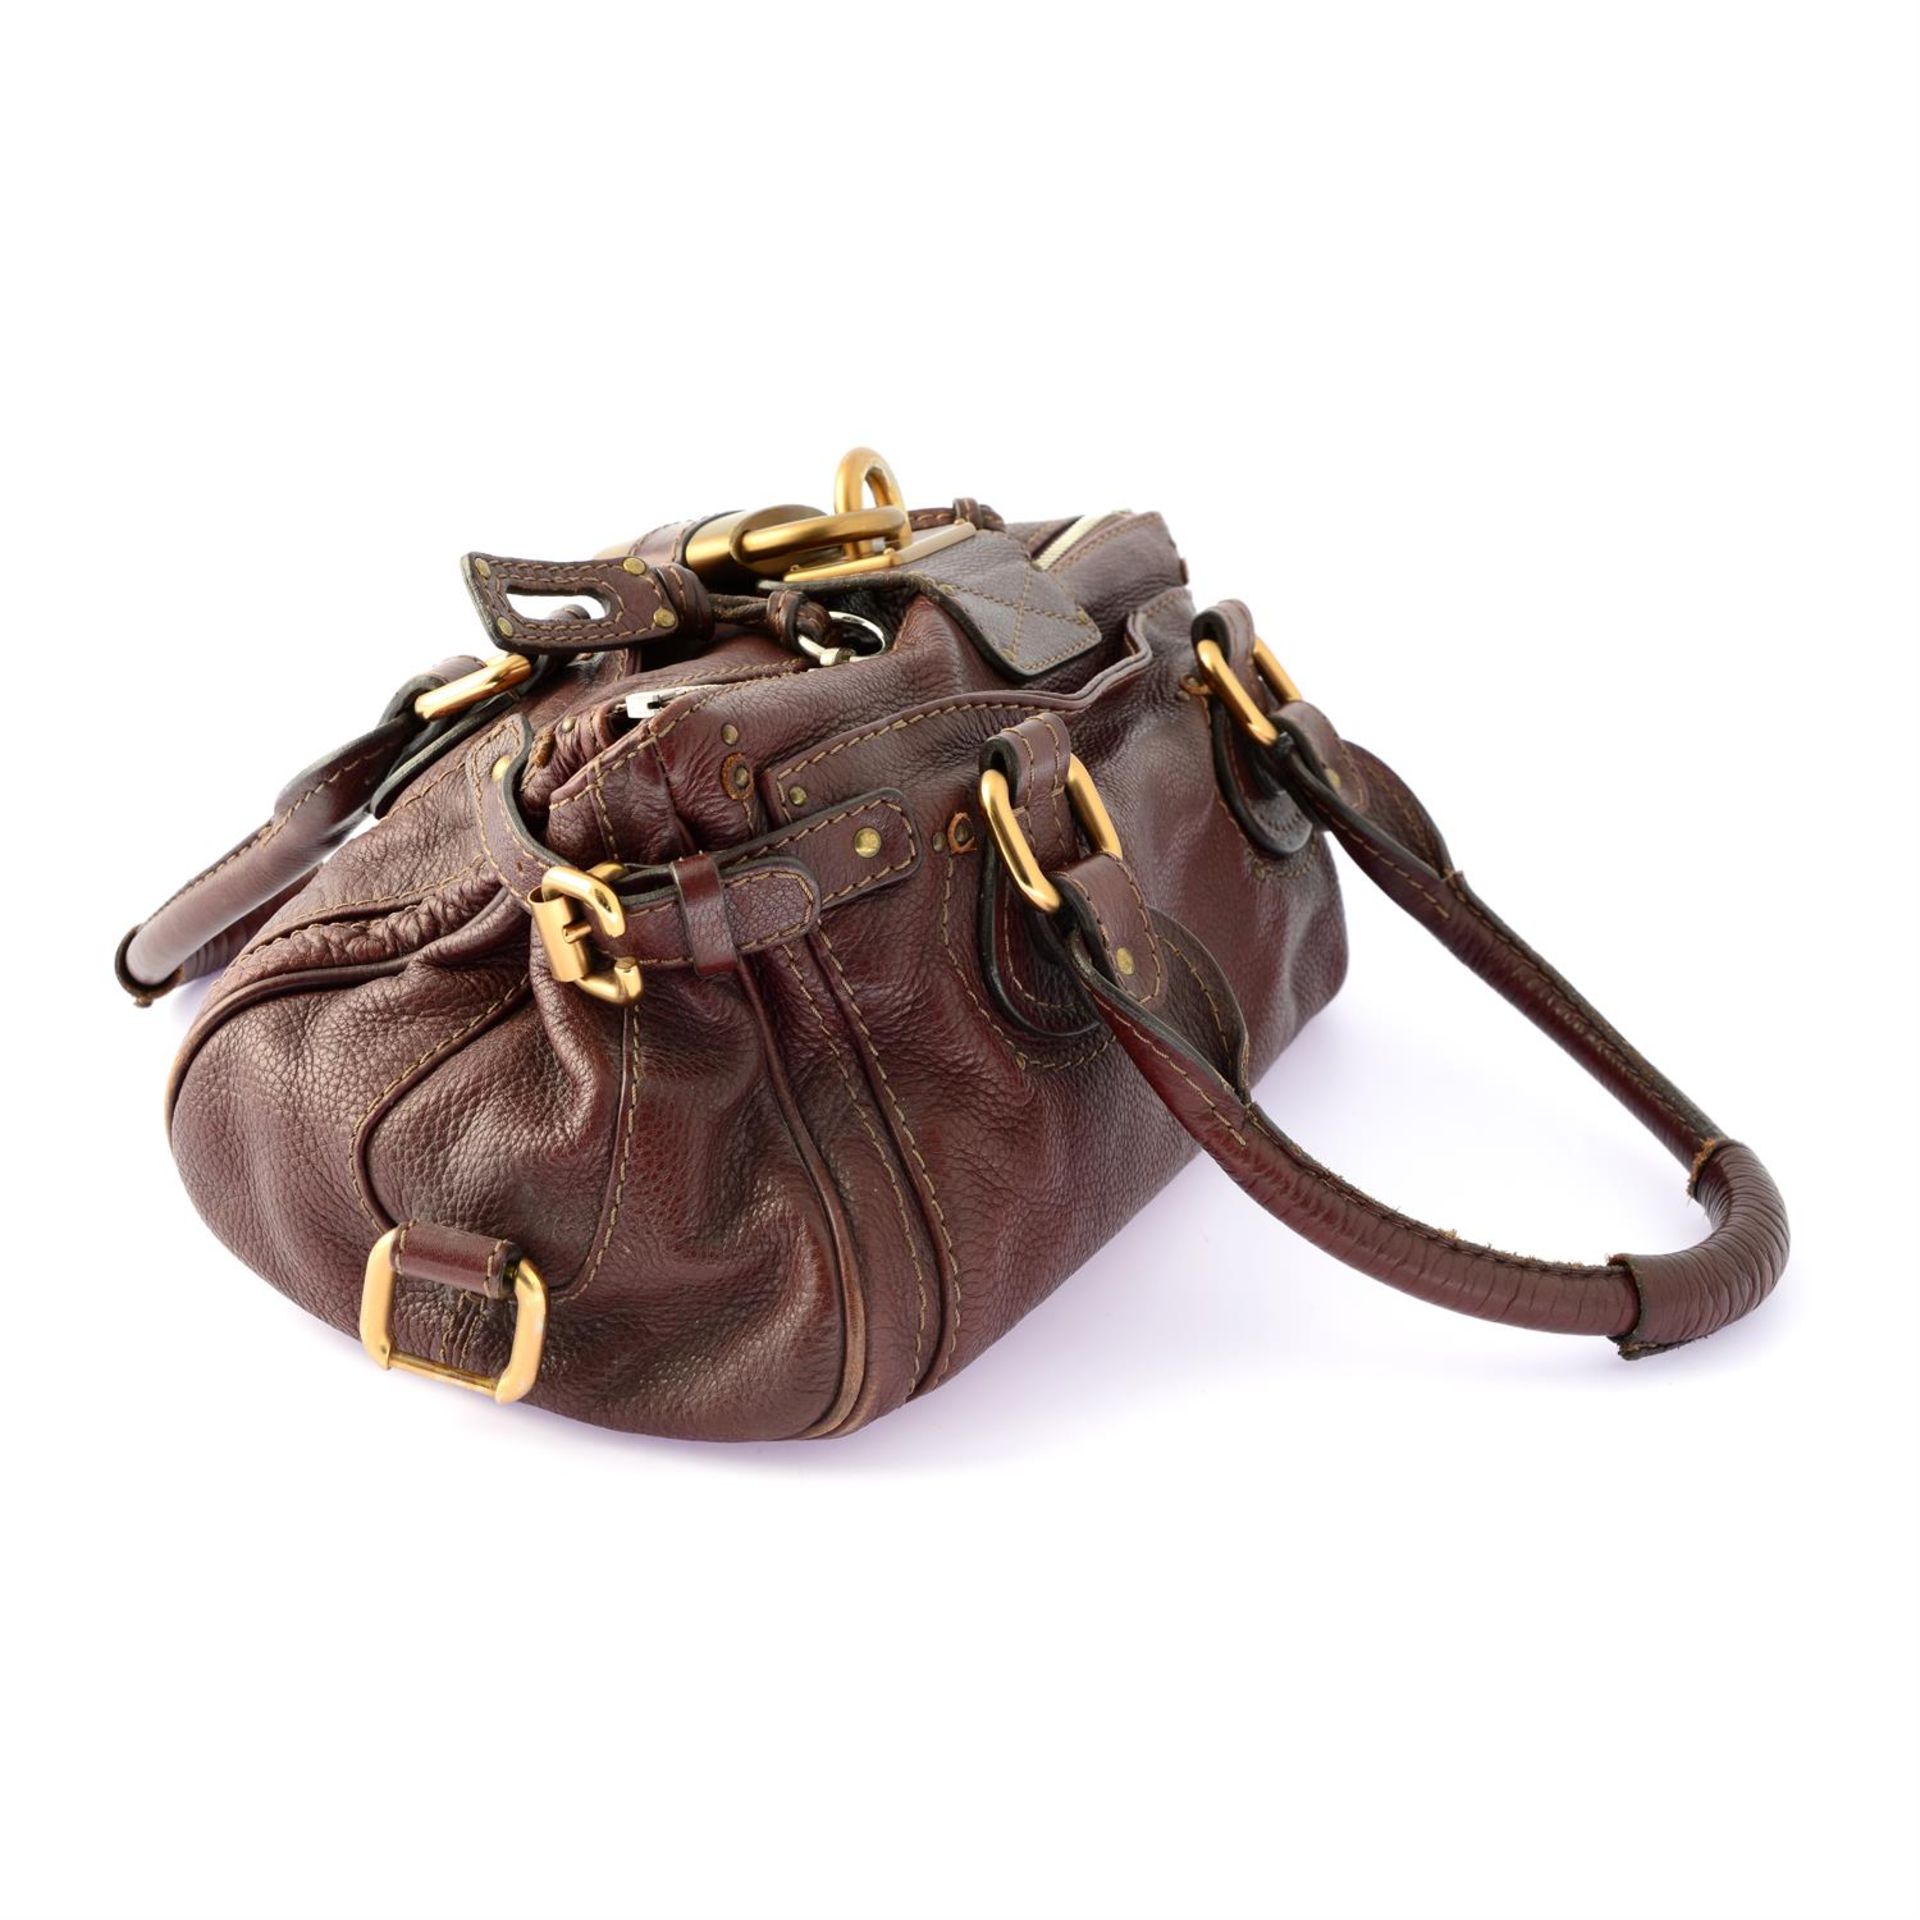 CHLOÉ - a brown leather Paddington handbag. - Bild 3 aus 5